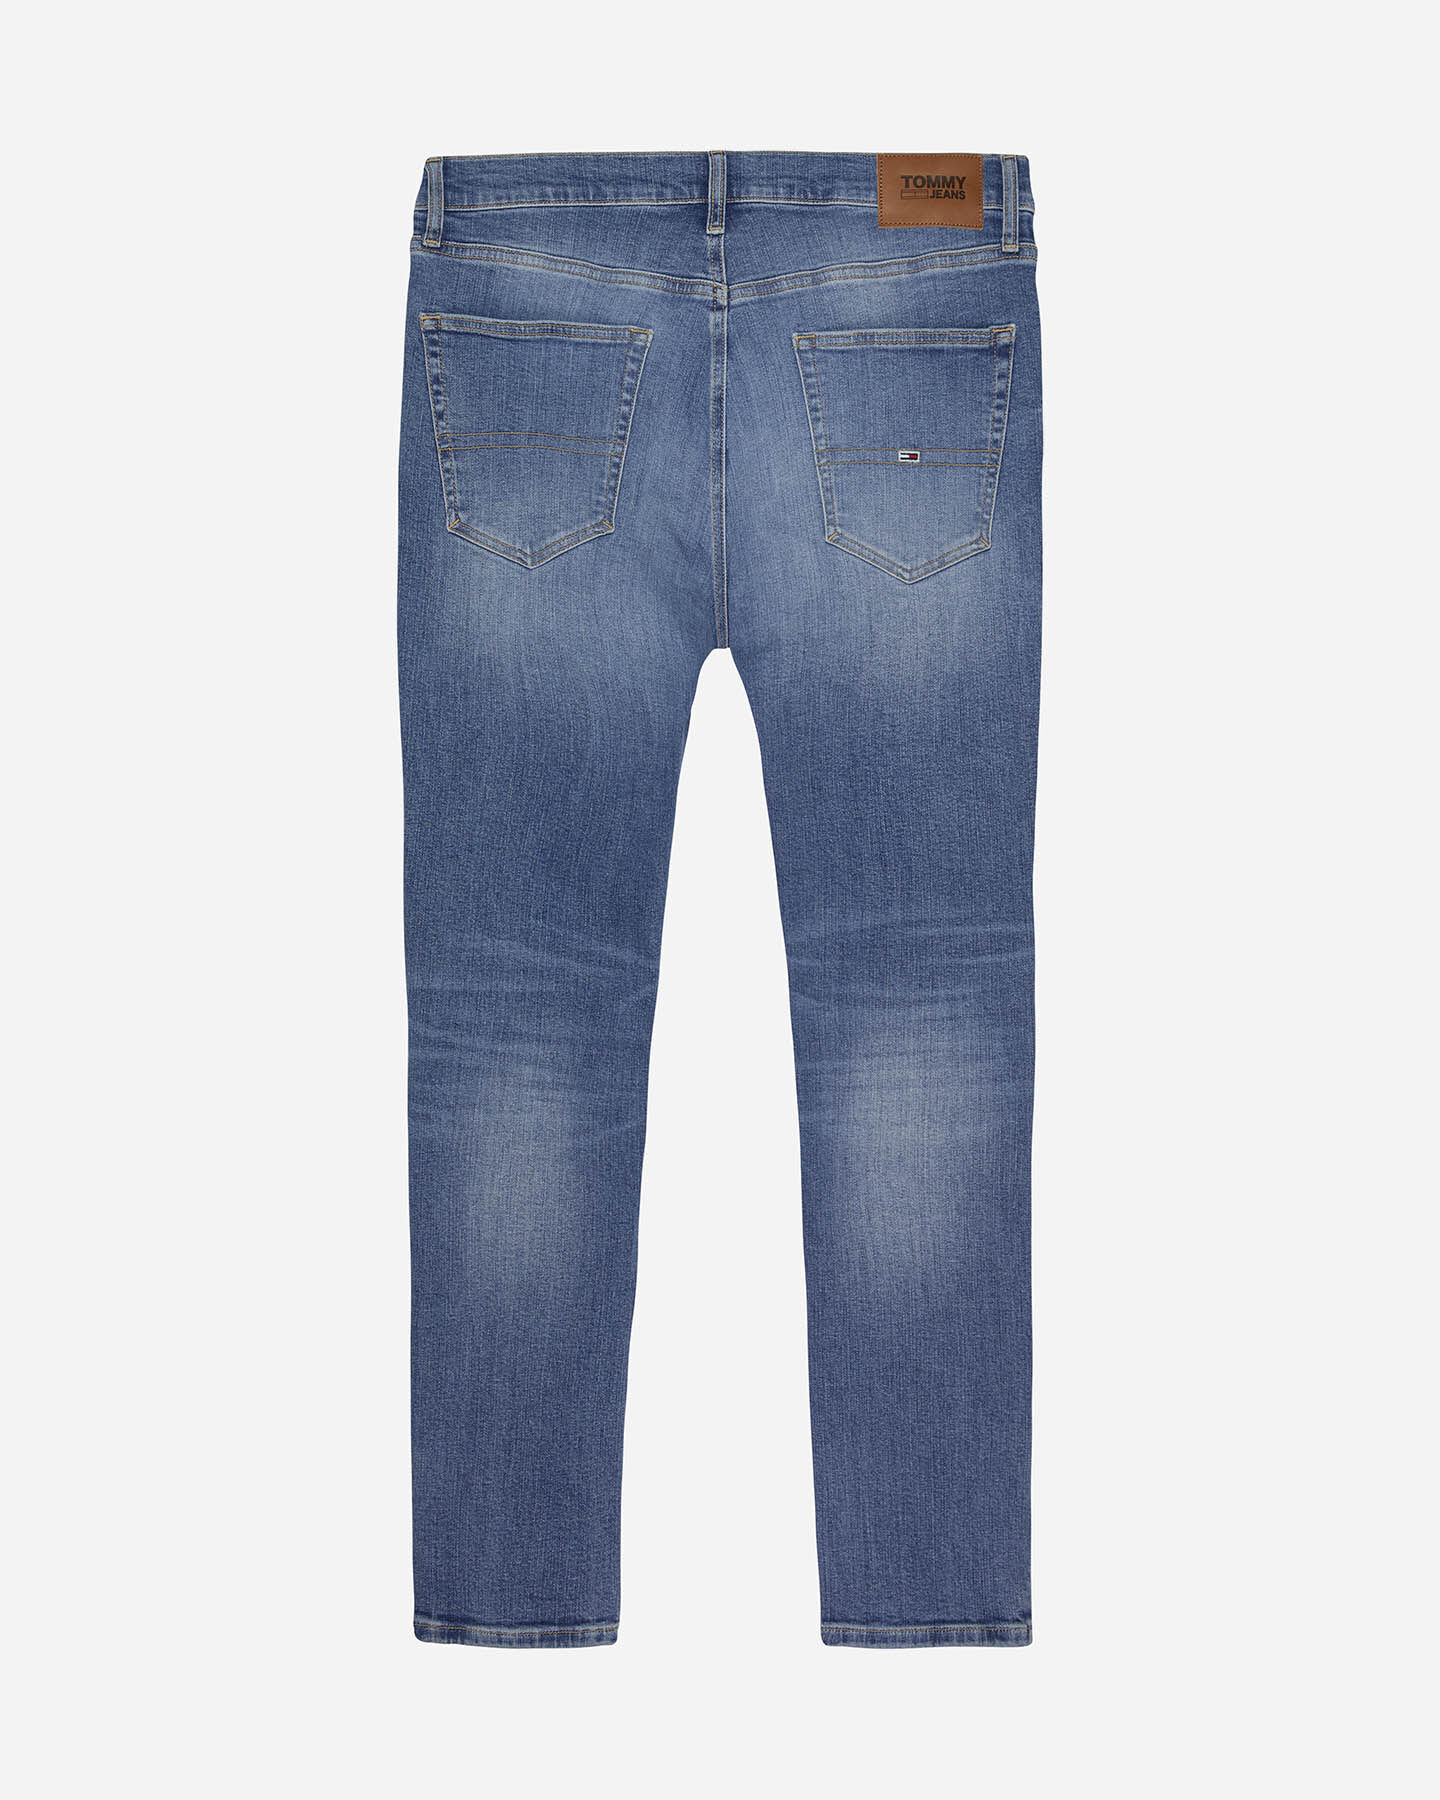  Jeans TOMMY HILFIGER AUSTIN SLIM M S4122781|1AB|30 scatto 1